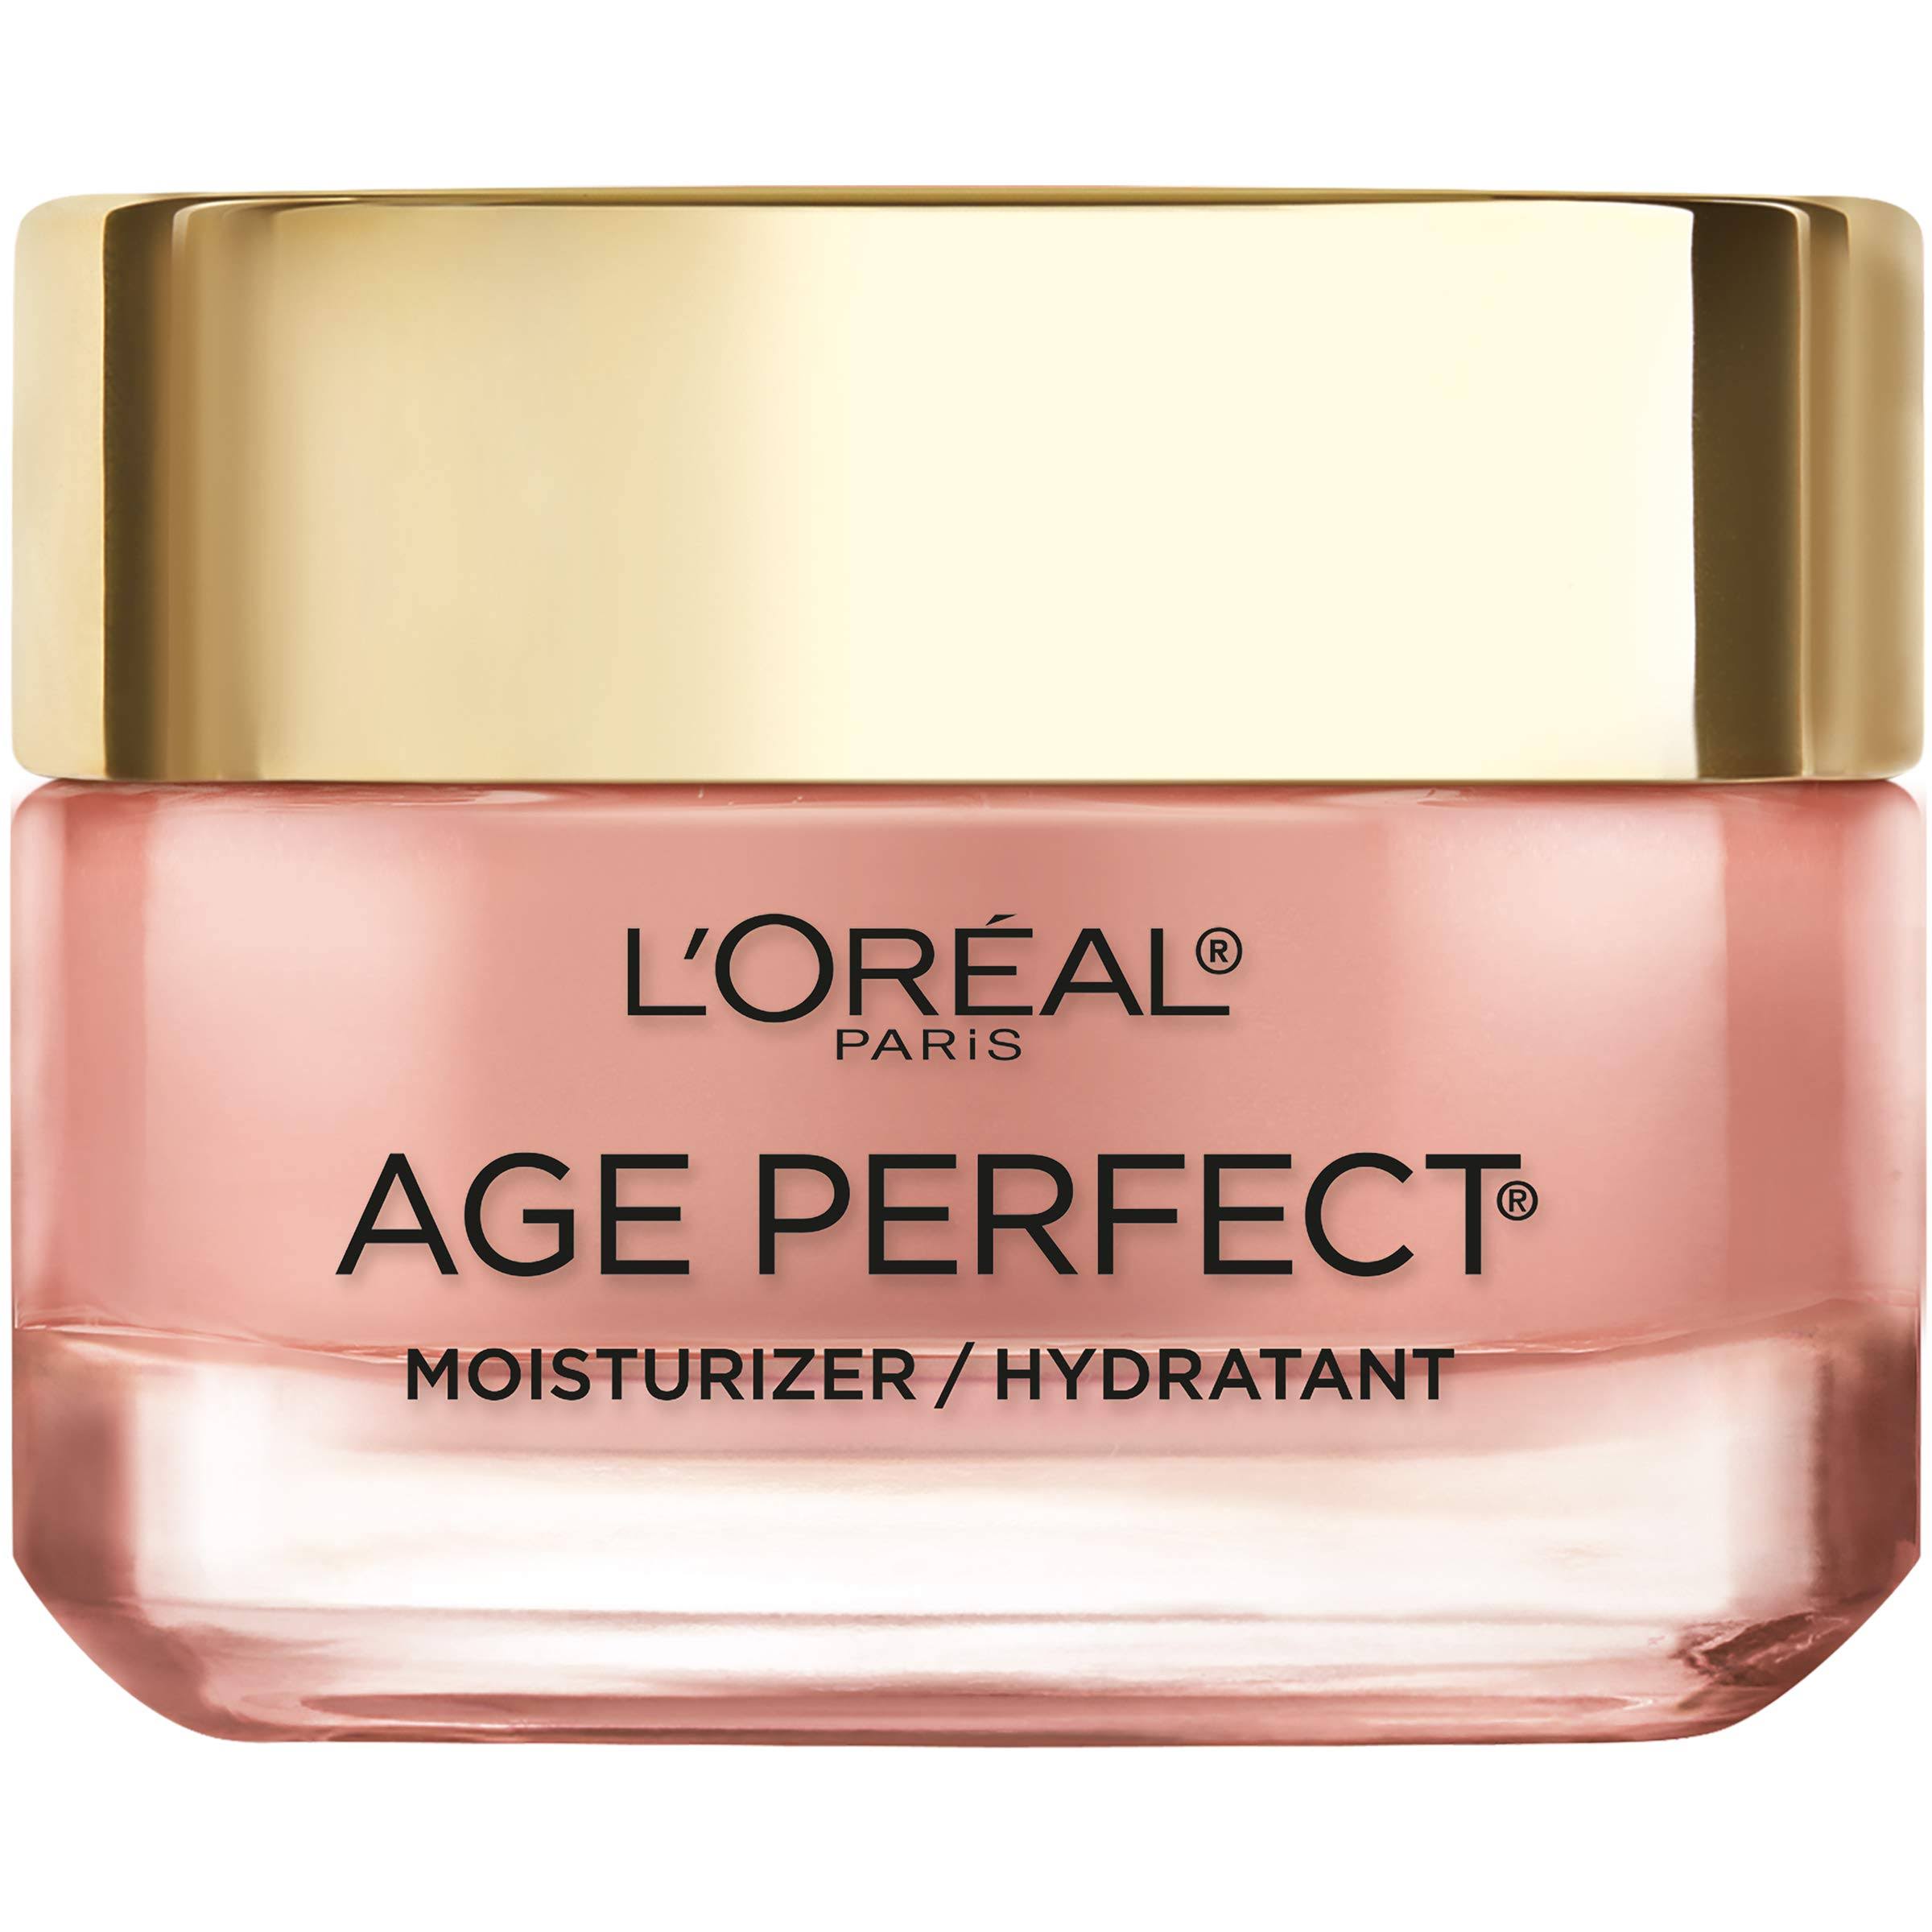 L'Oreal Paris Skin Care Age Perfect Cell Renewal Rosy Tone Moisturizer - 1.7oz